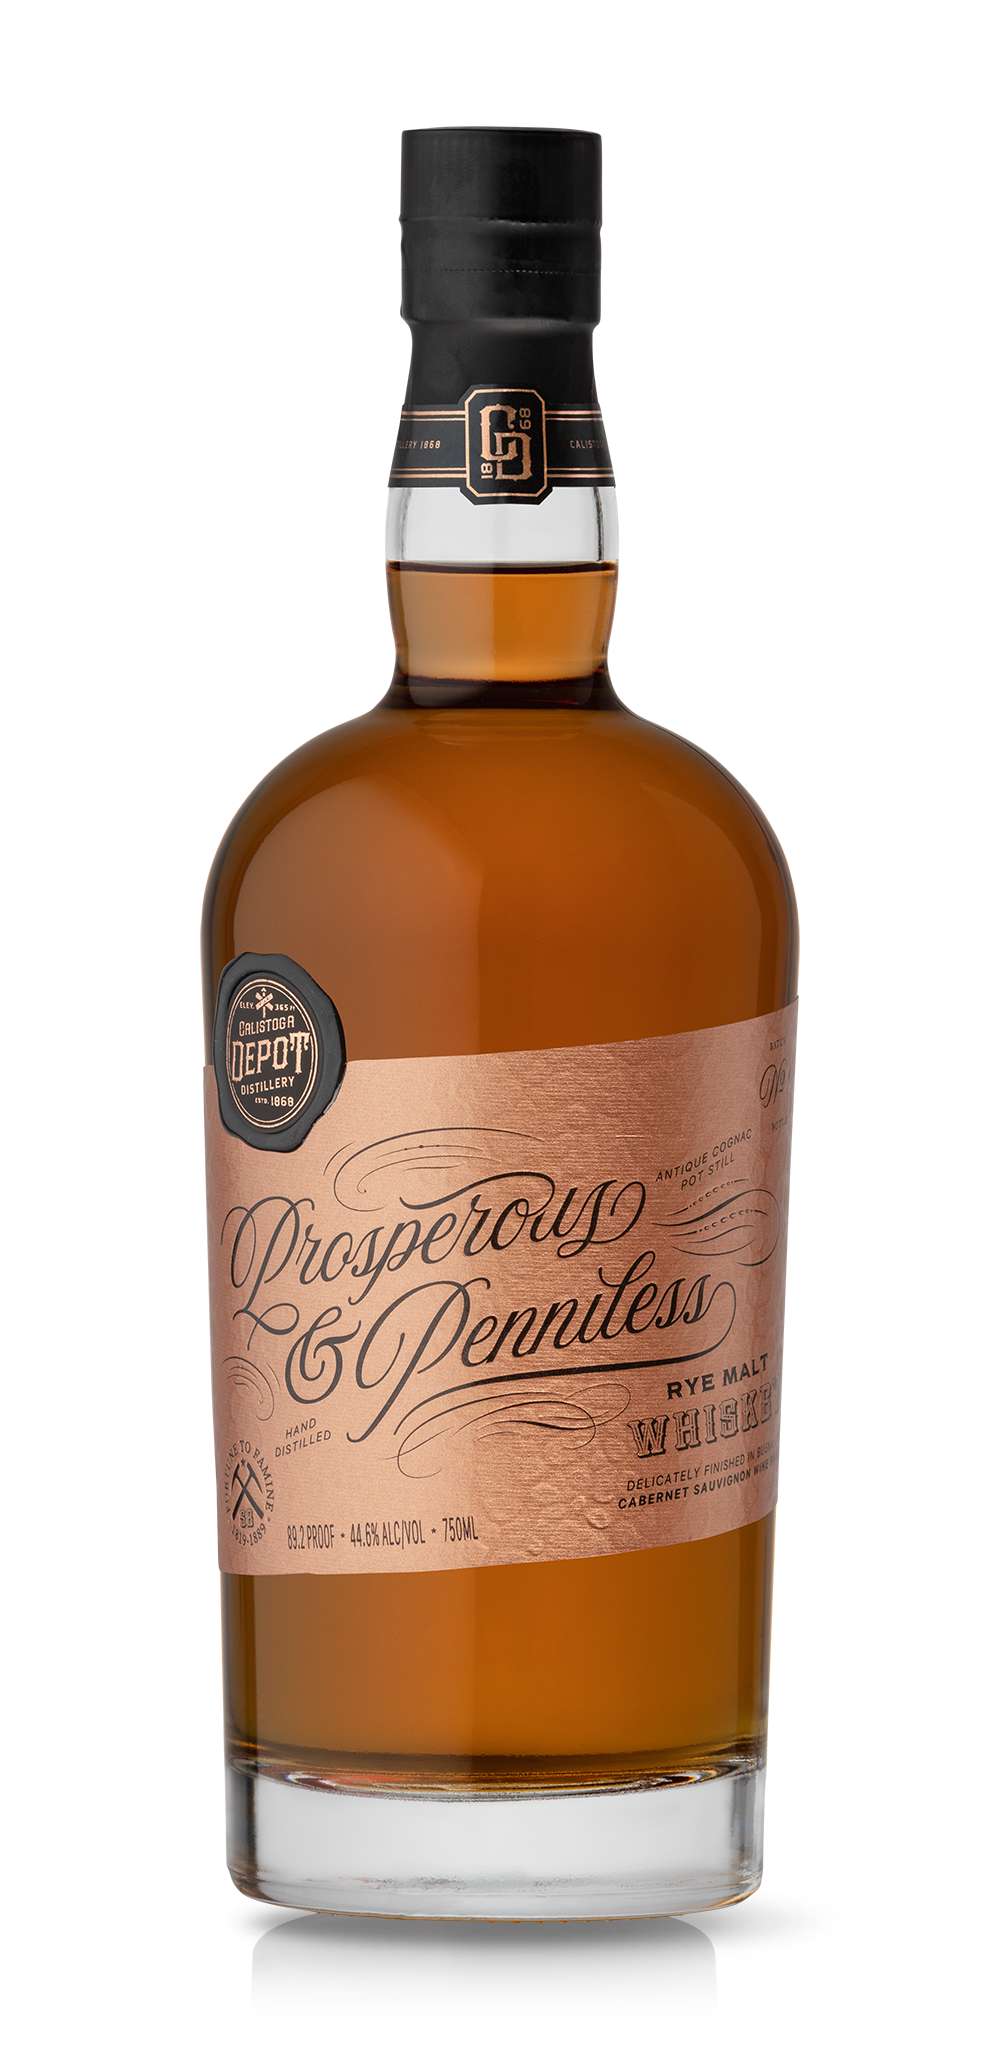 Prosperous & Penniless Rye Malt Whiskey by the Calistoga Depot Spirits